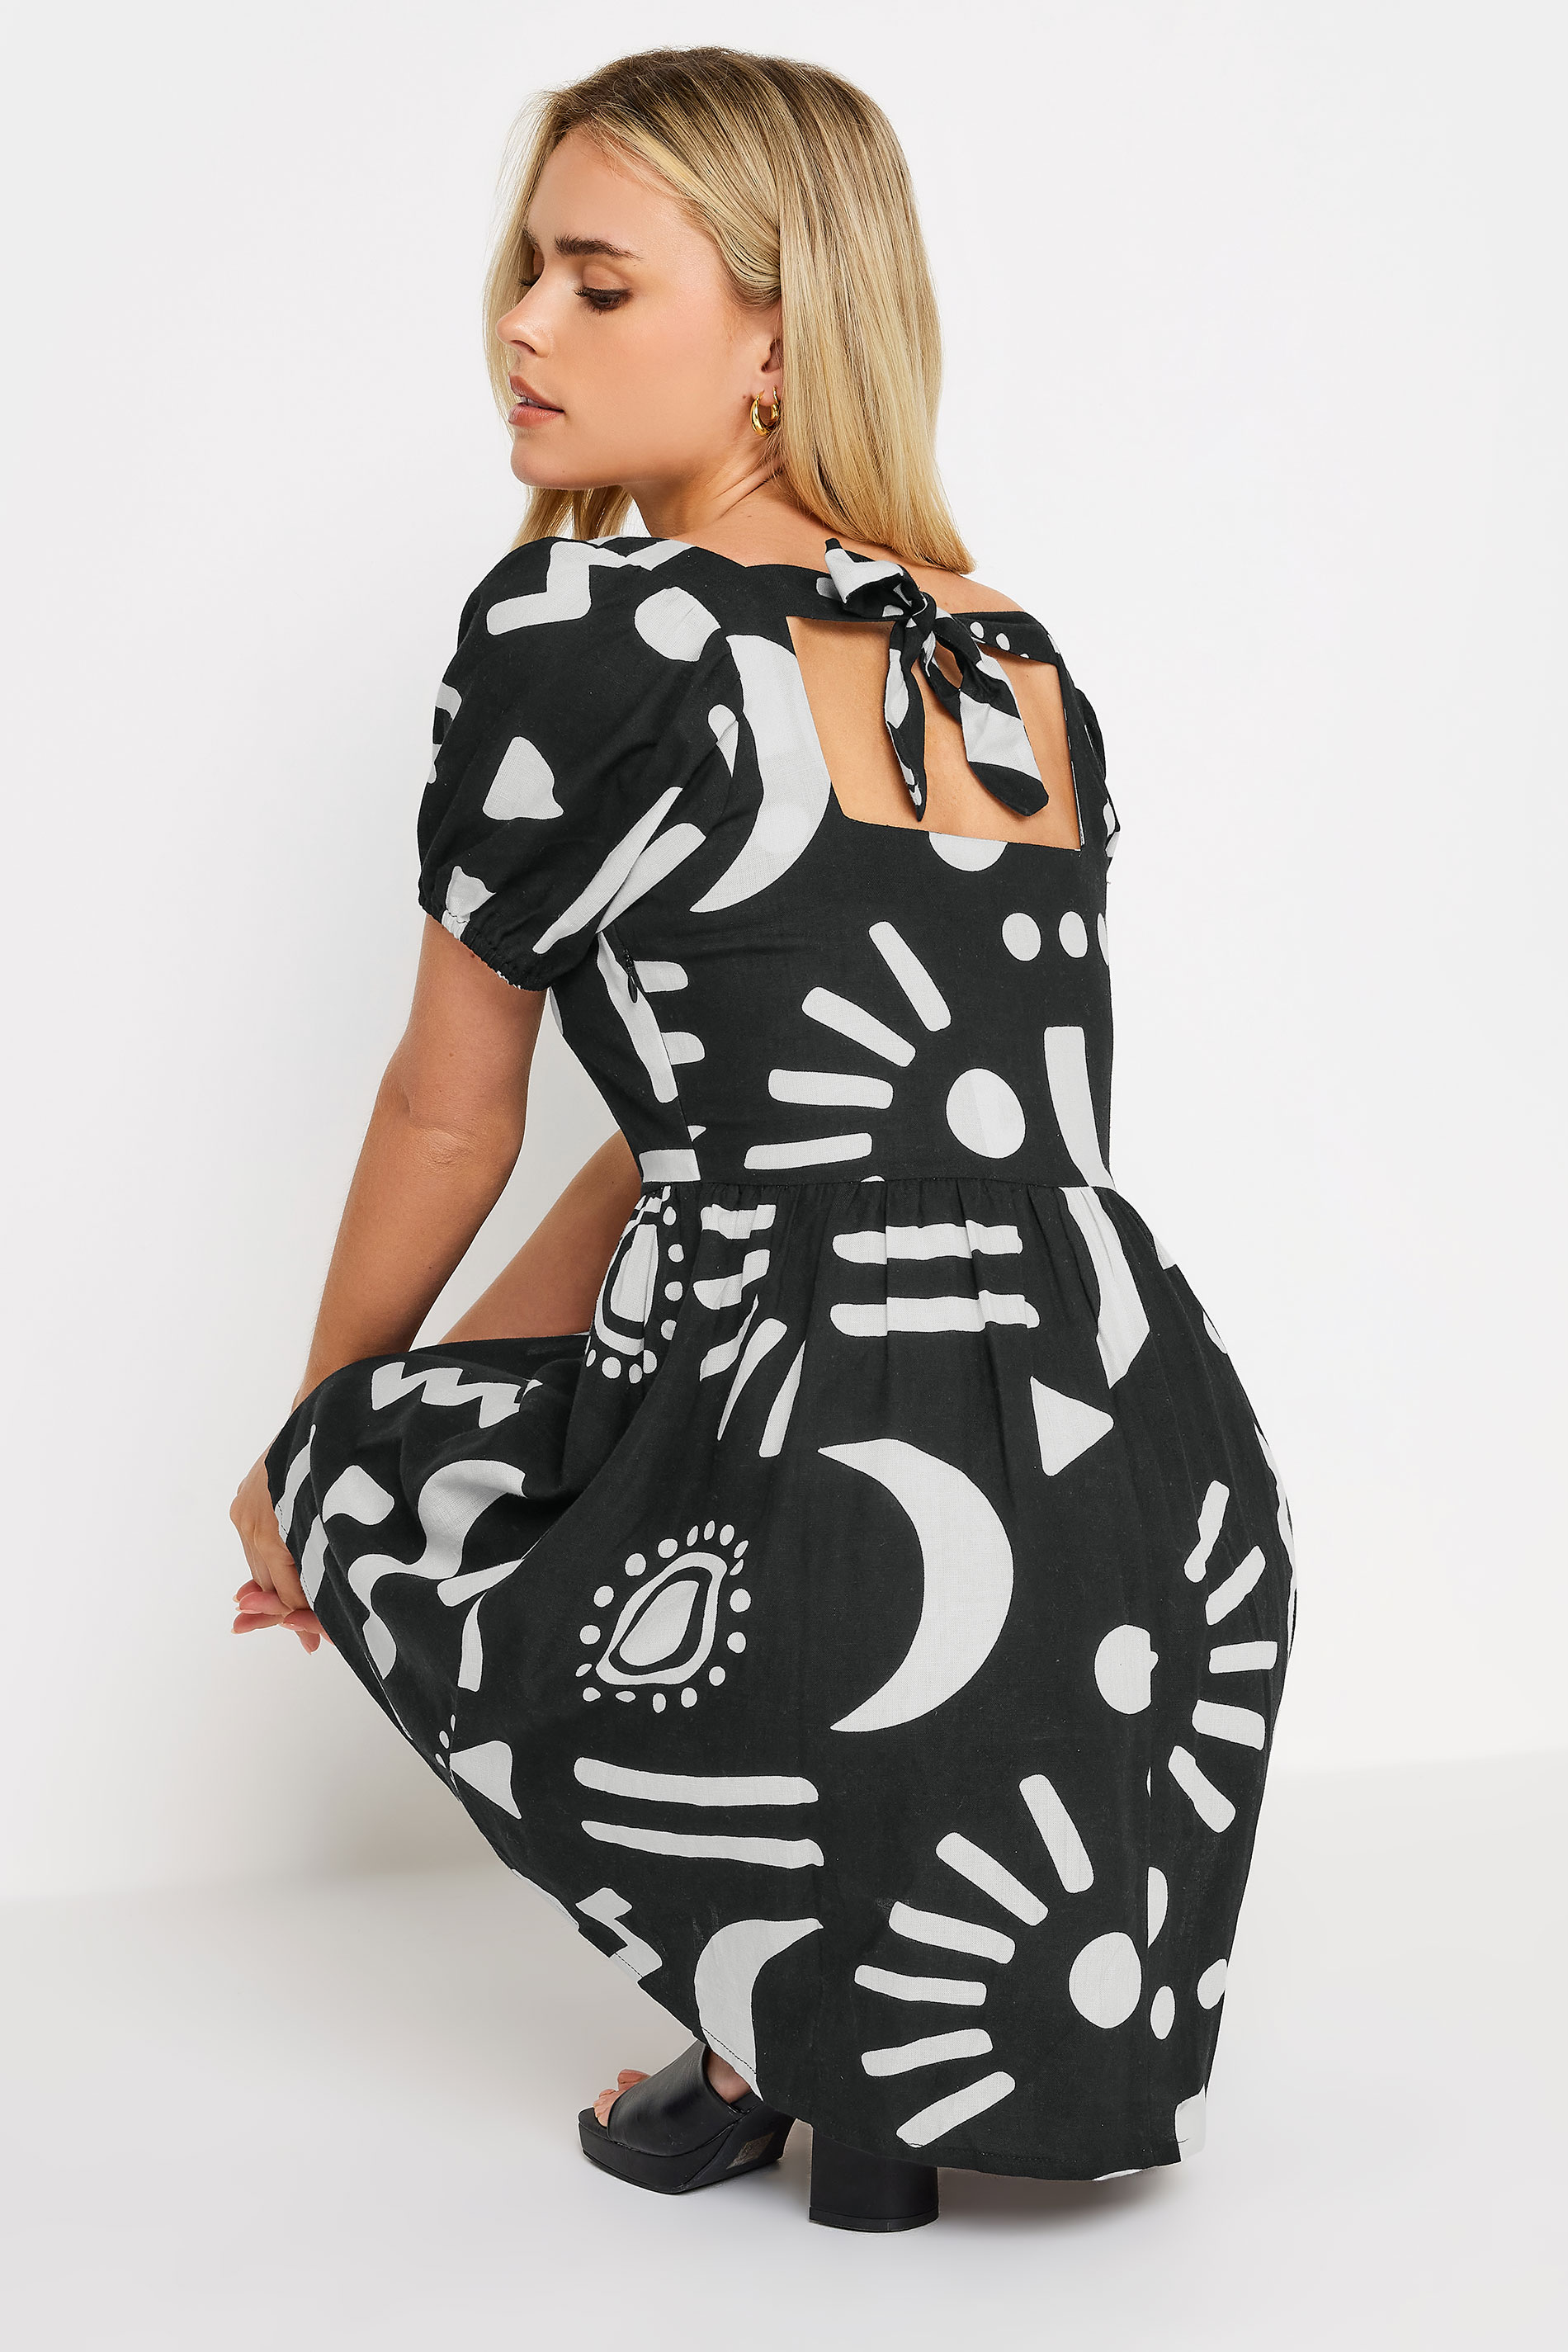 PixieGirl Petite Womens Black Abstract Print Linen Mini Dress | PixieGirl 2